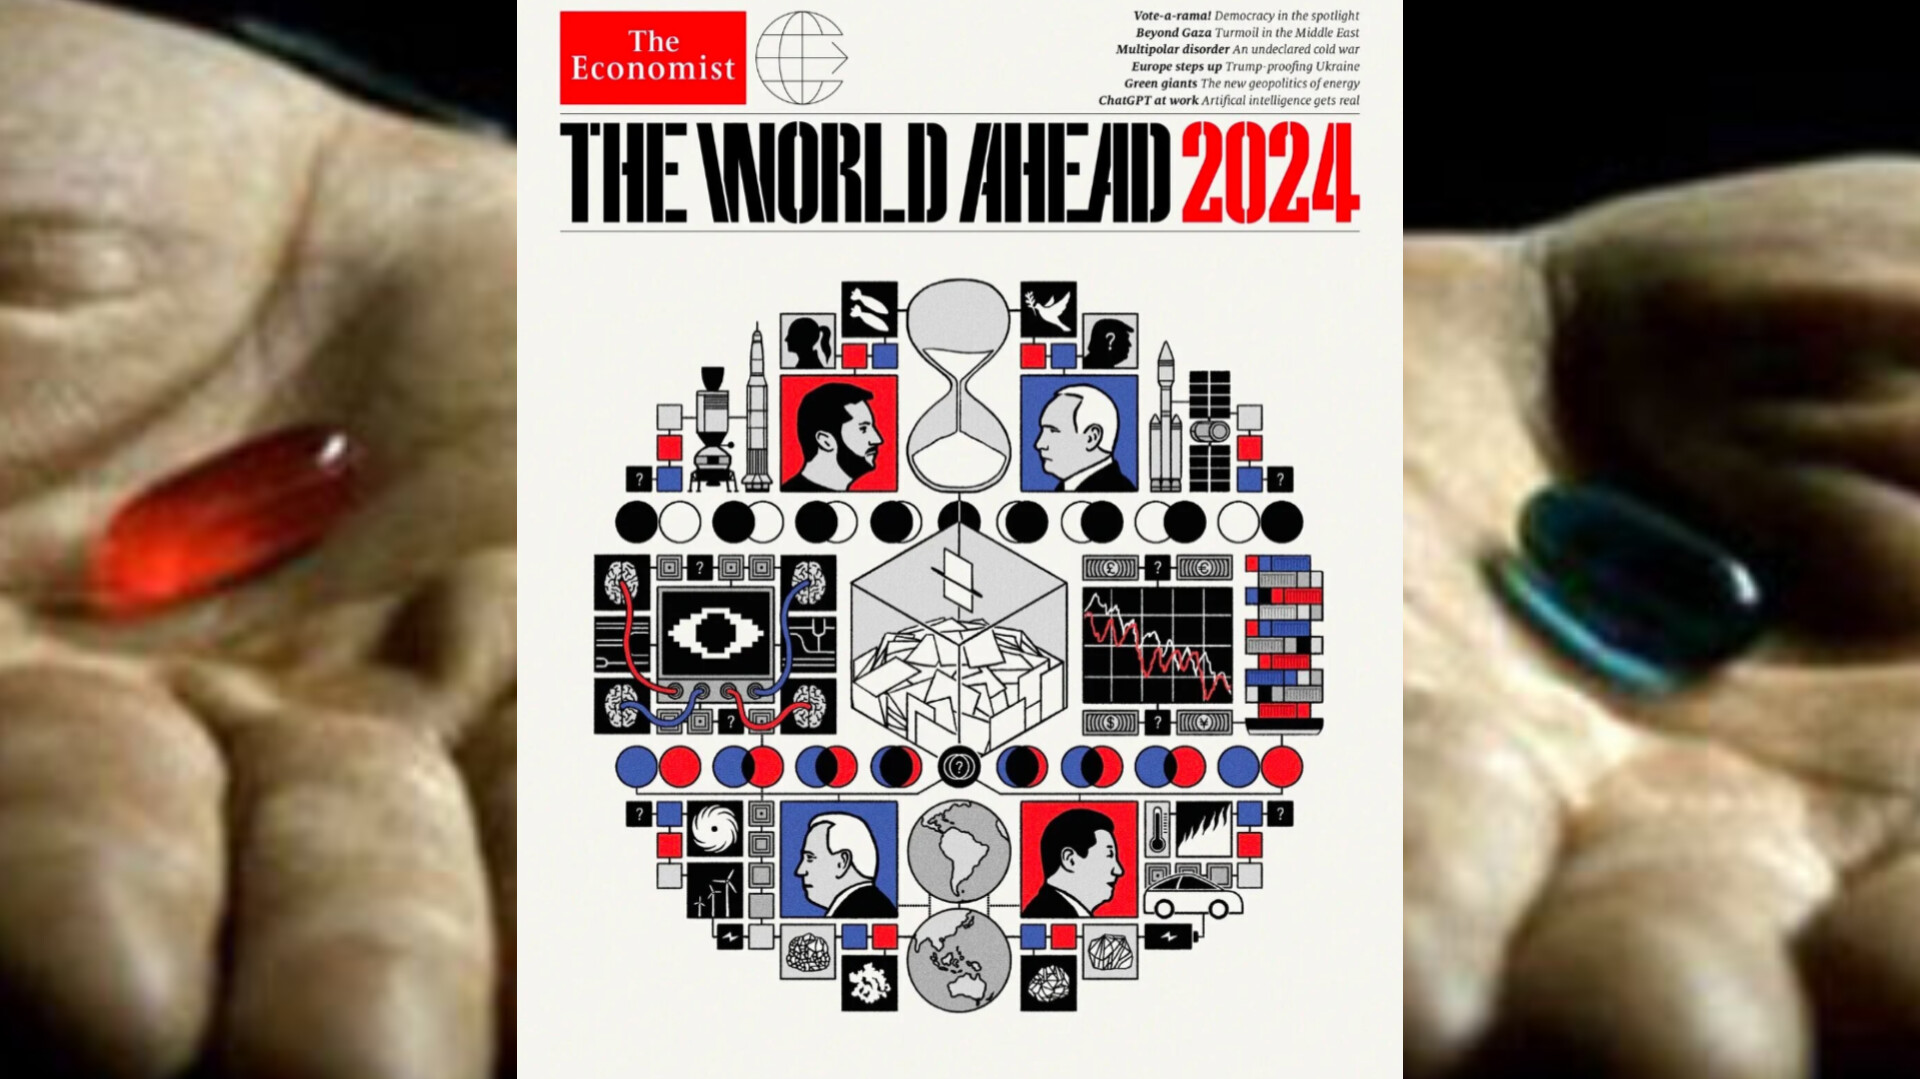 Обложка экономист 2024 март. The Economist 2024. Economist 2024 новая обложка. Обложка журнала экономист 2024. Обложка экономист 2024 февраль.